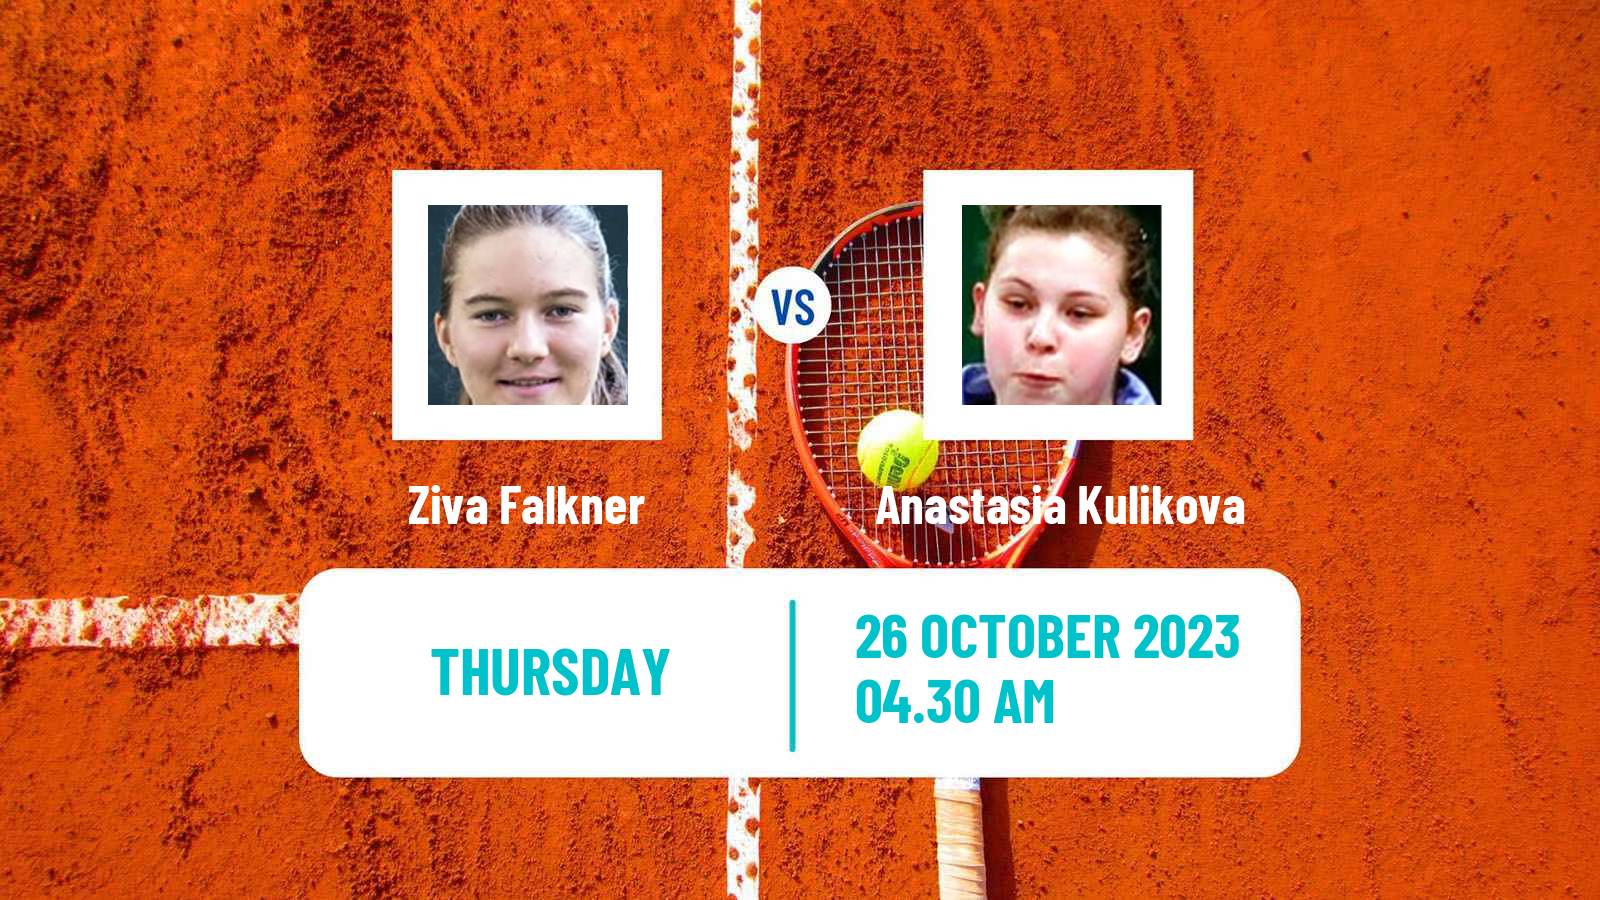 Tennis ITF W25 Istanbul Women Ziva Falkner - Anastasia Kulikova